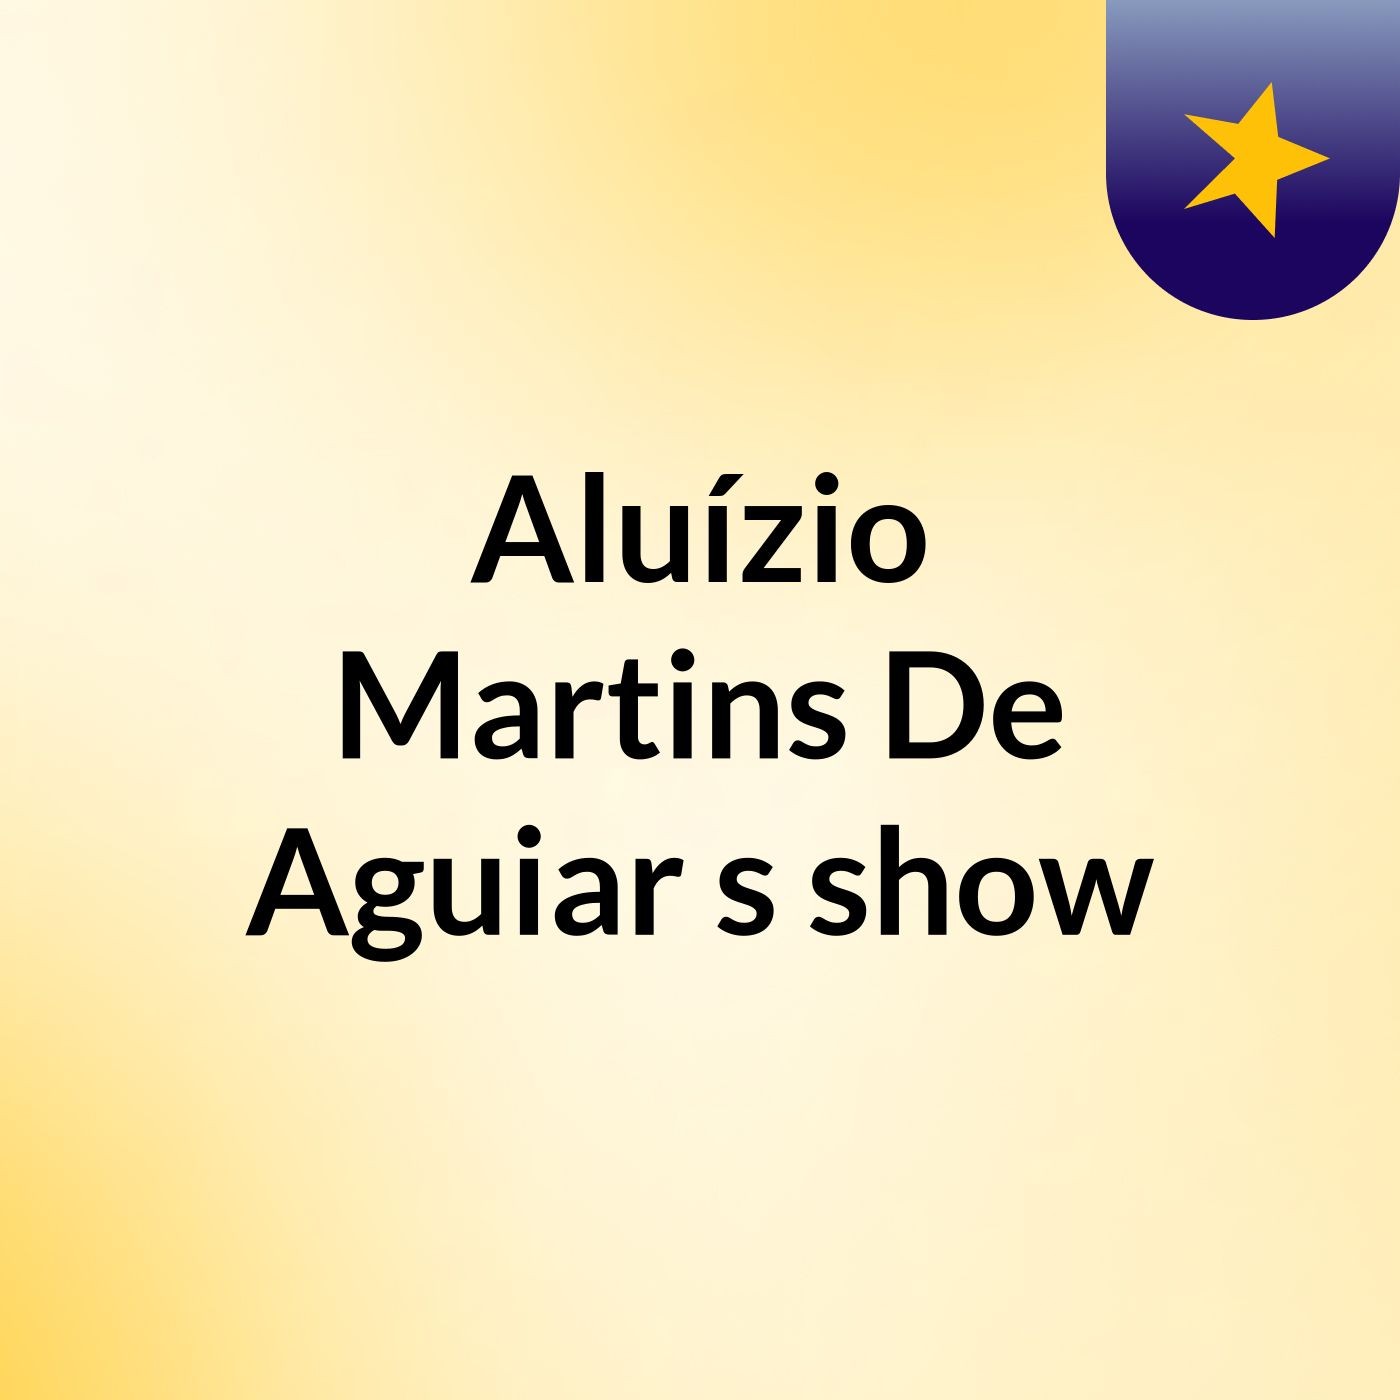 Aluízio Martins De Aguiar's show